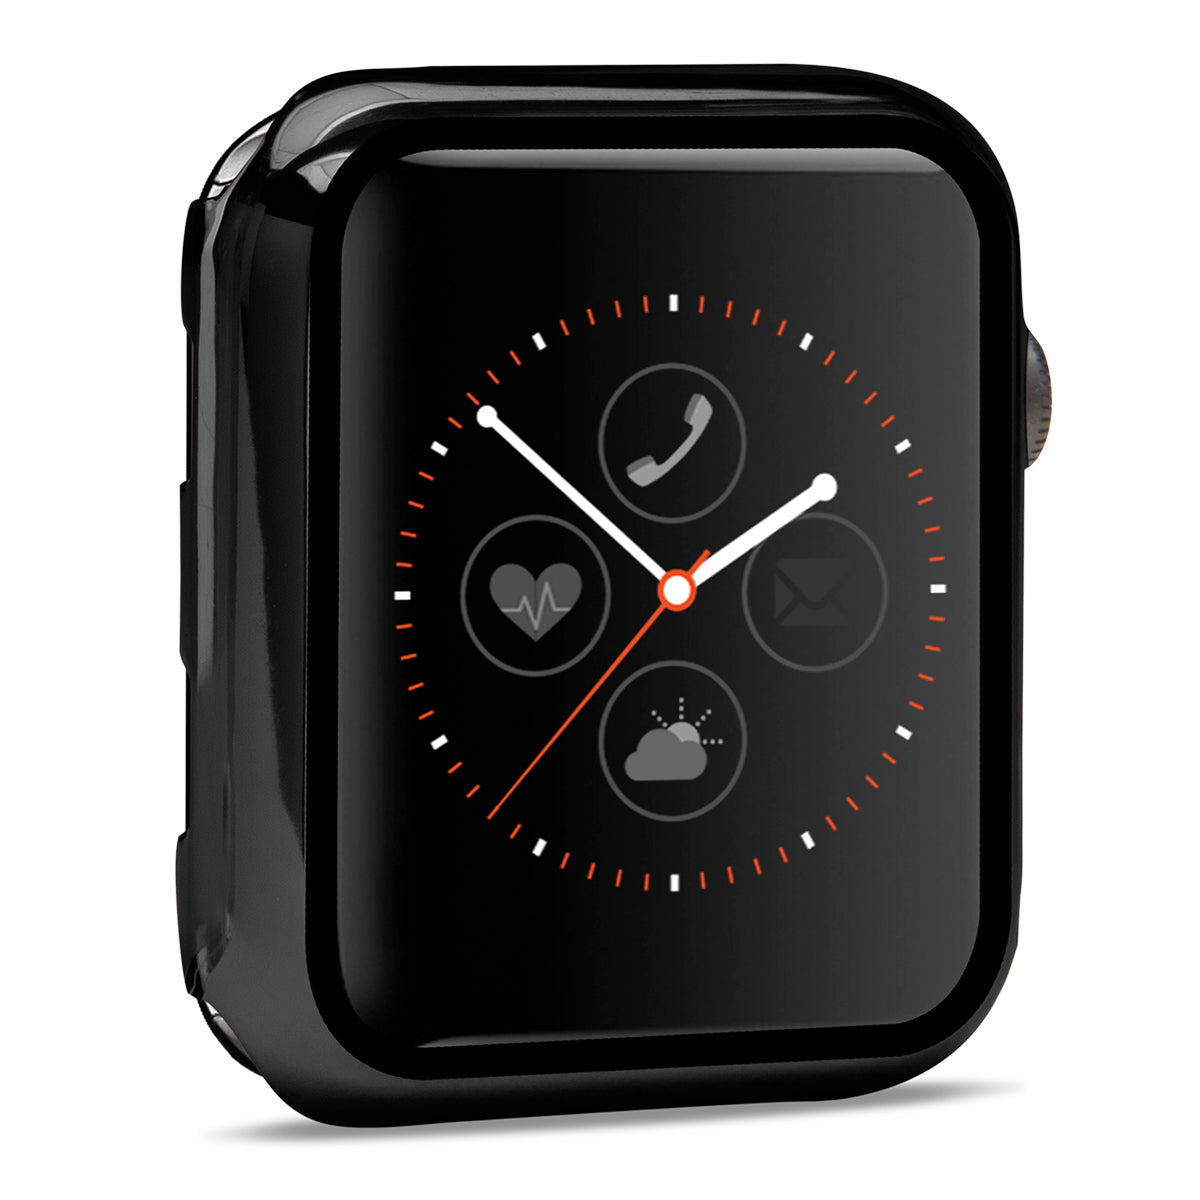 Apple Watch PC Bumper with Screen - Gloss Black 44mm Smart Watch